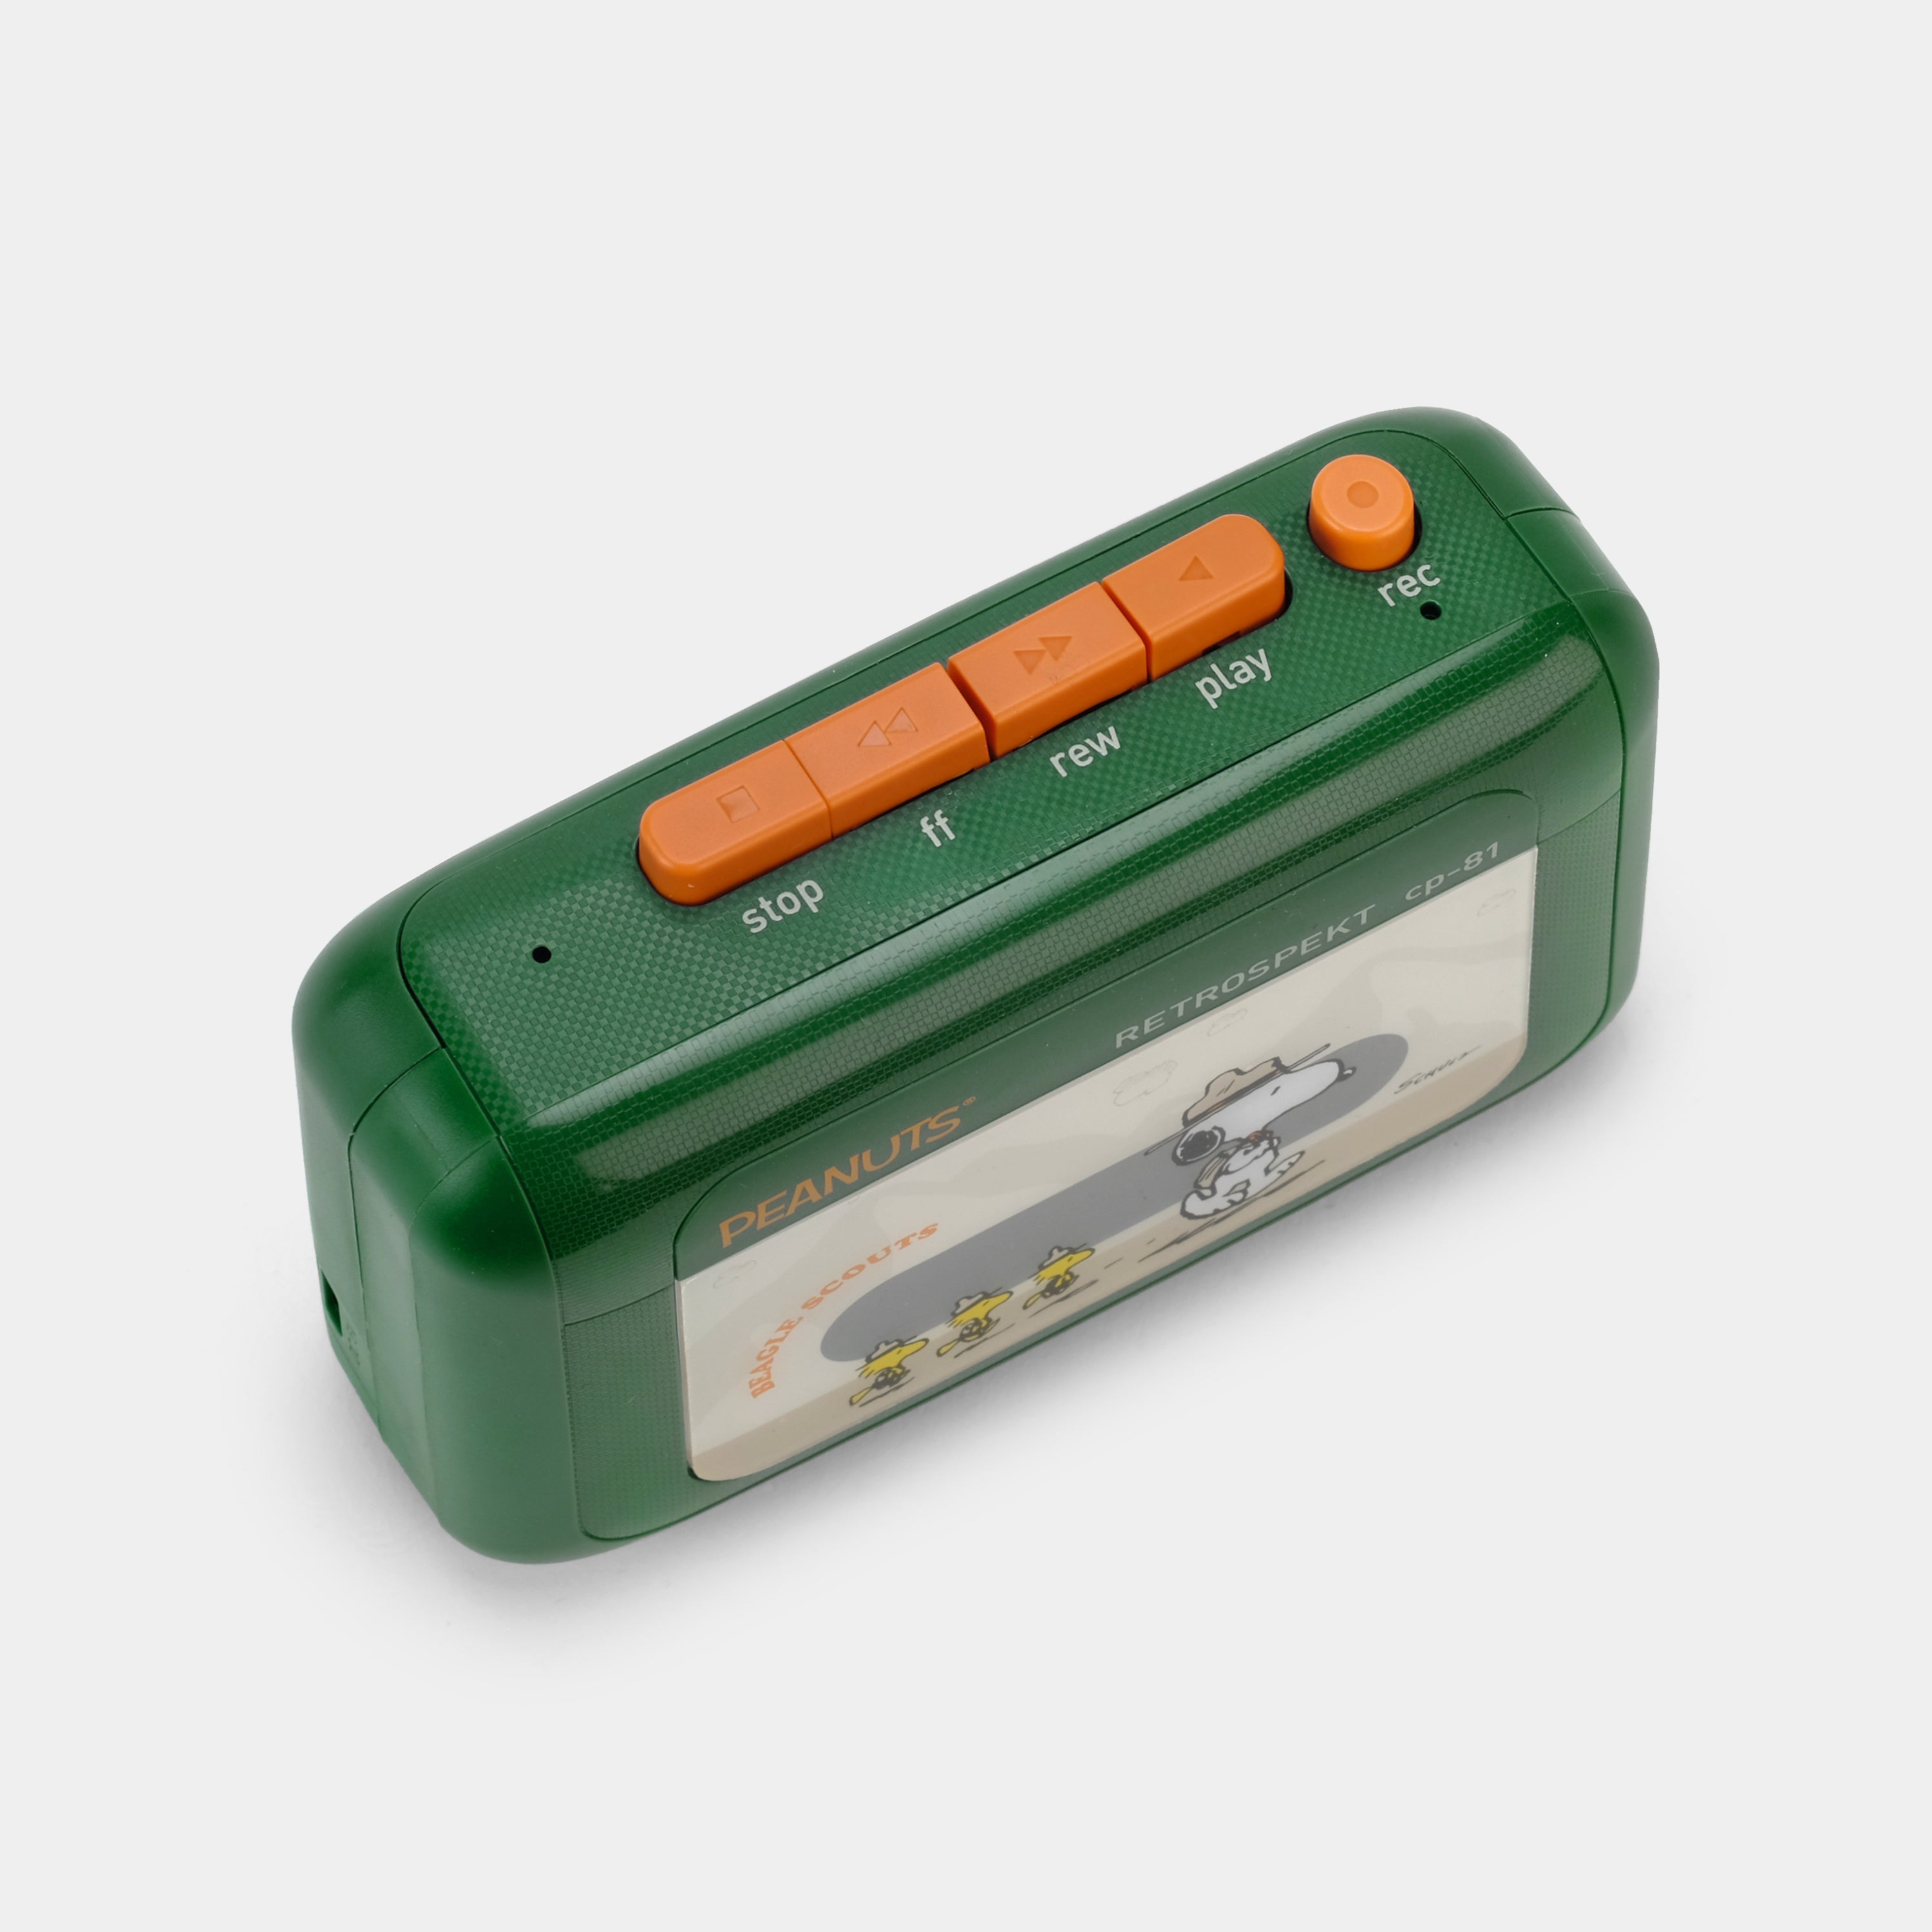 Peanuts Beagle Scouts Retrospekt CP-81 Portable Cassette Player